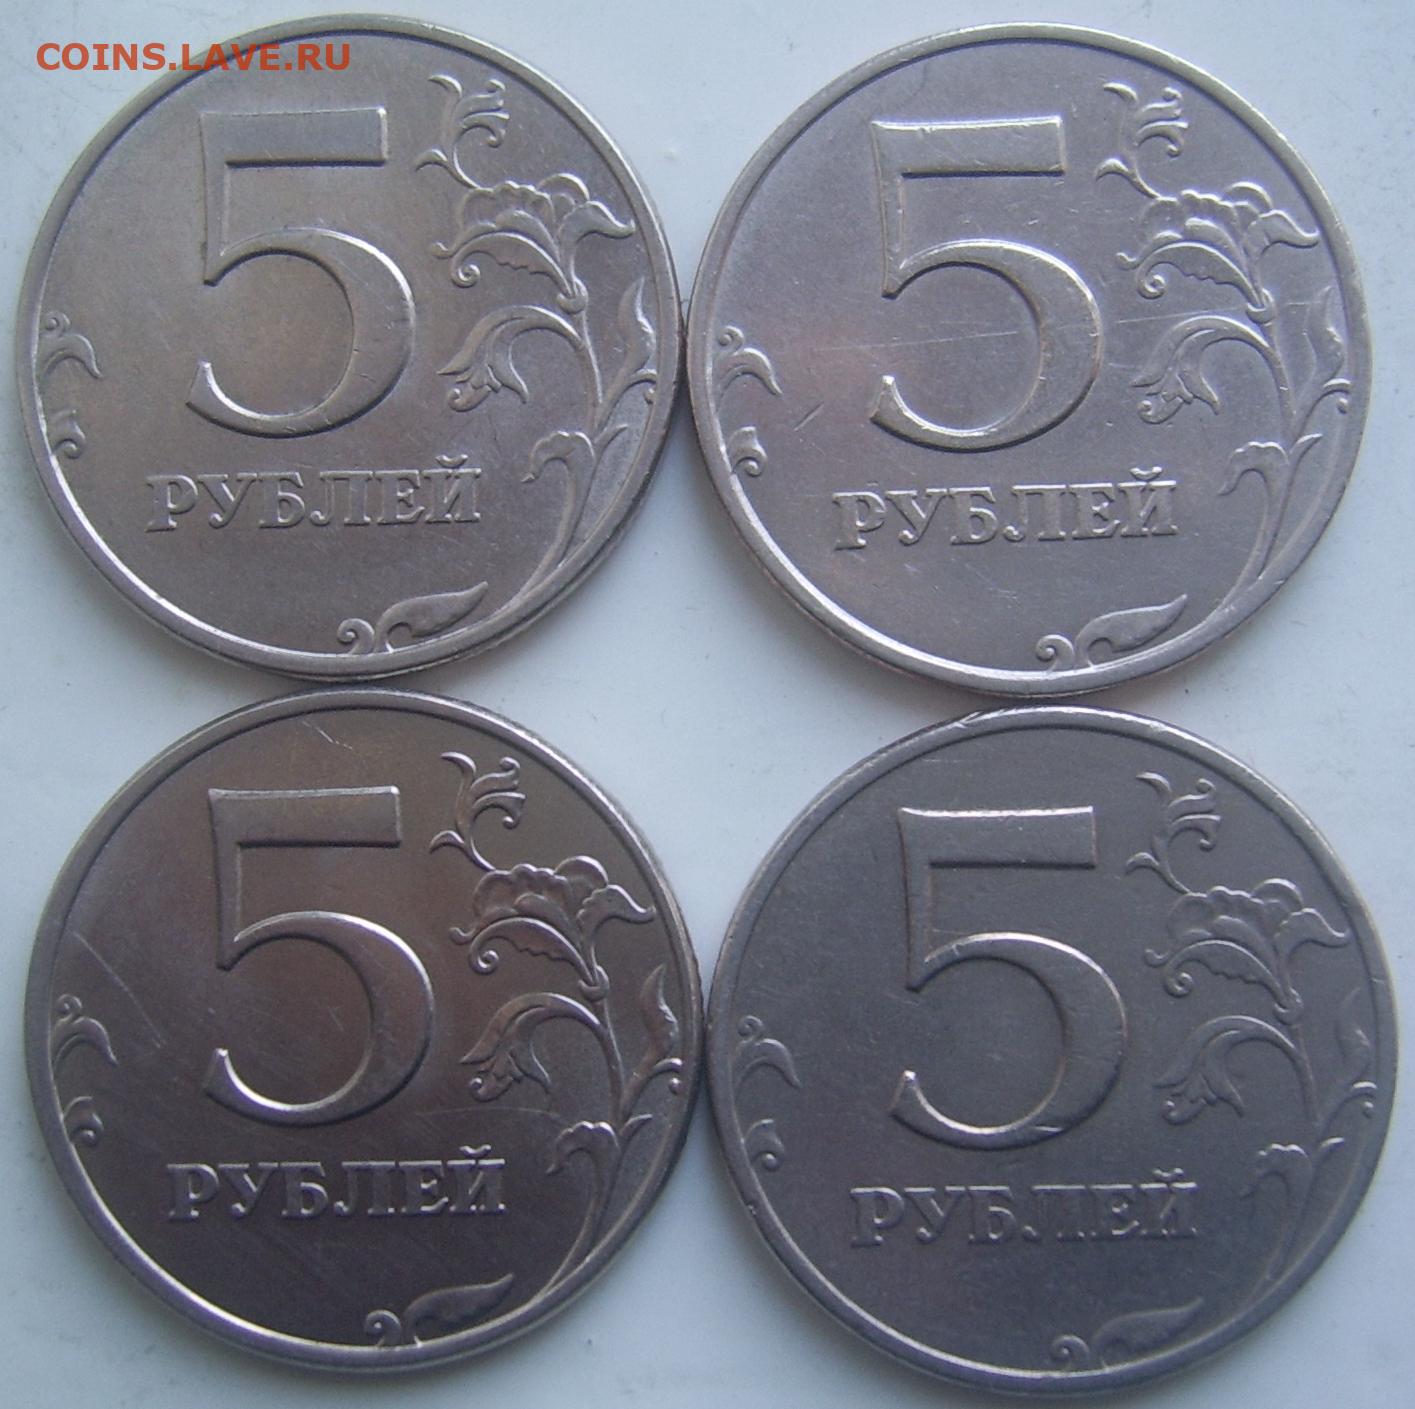 Тариф 5 рублей. 5 Рублей 1998 ММД. 5 Рублей 1998. 5 Рублей 1998 ММД шт.а1 и шт.а2. Пять рублей.